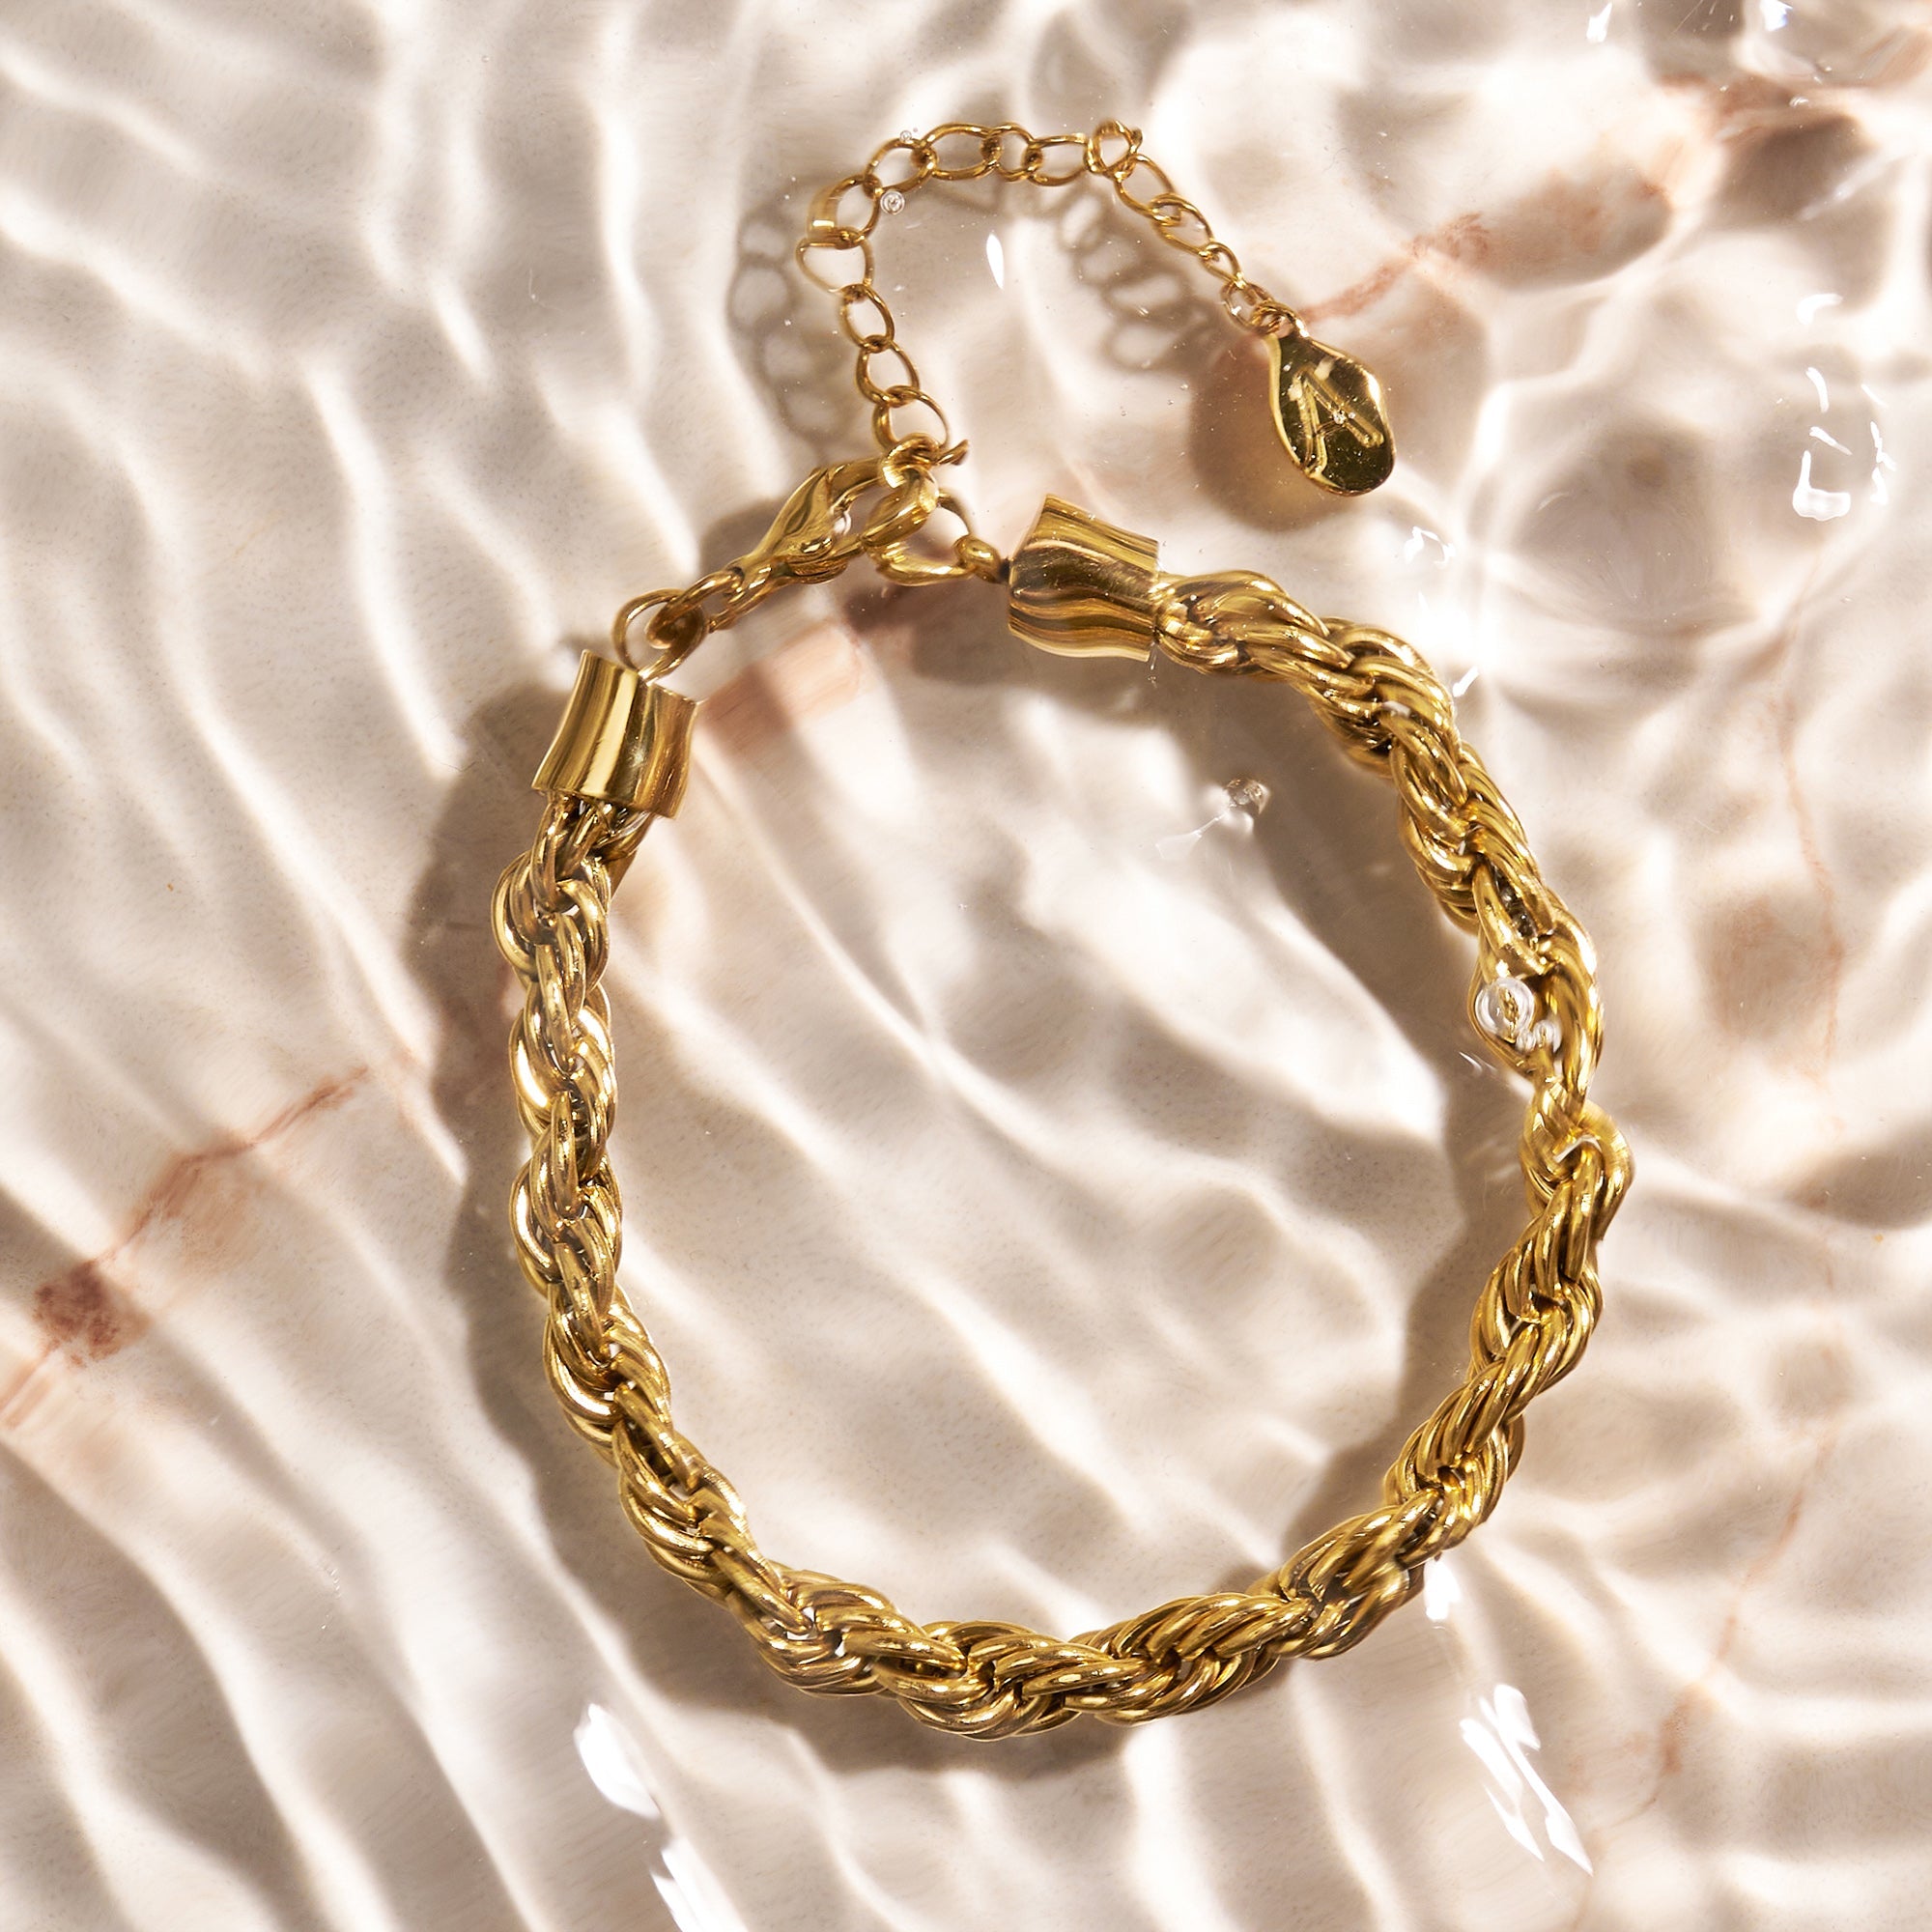 Accessorize London Women's Gold Stainless Steel Twisted Chain Bracelet